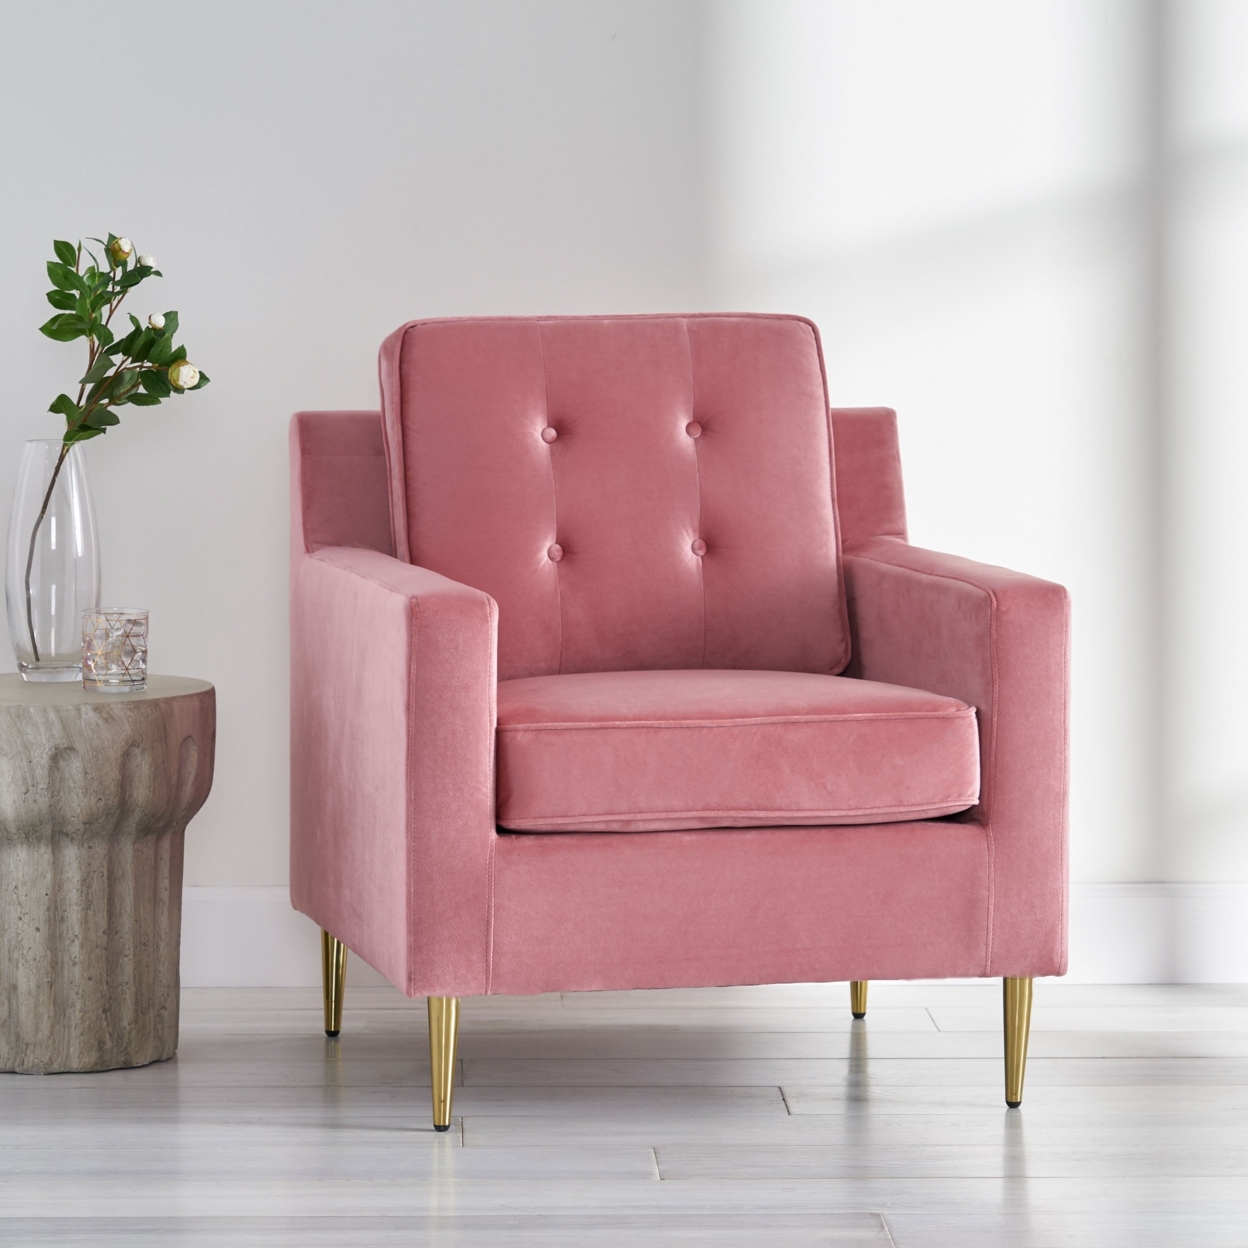 Taylea Modern Glam Tufted Velvet Club Chair - Teal